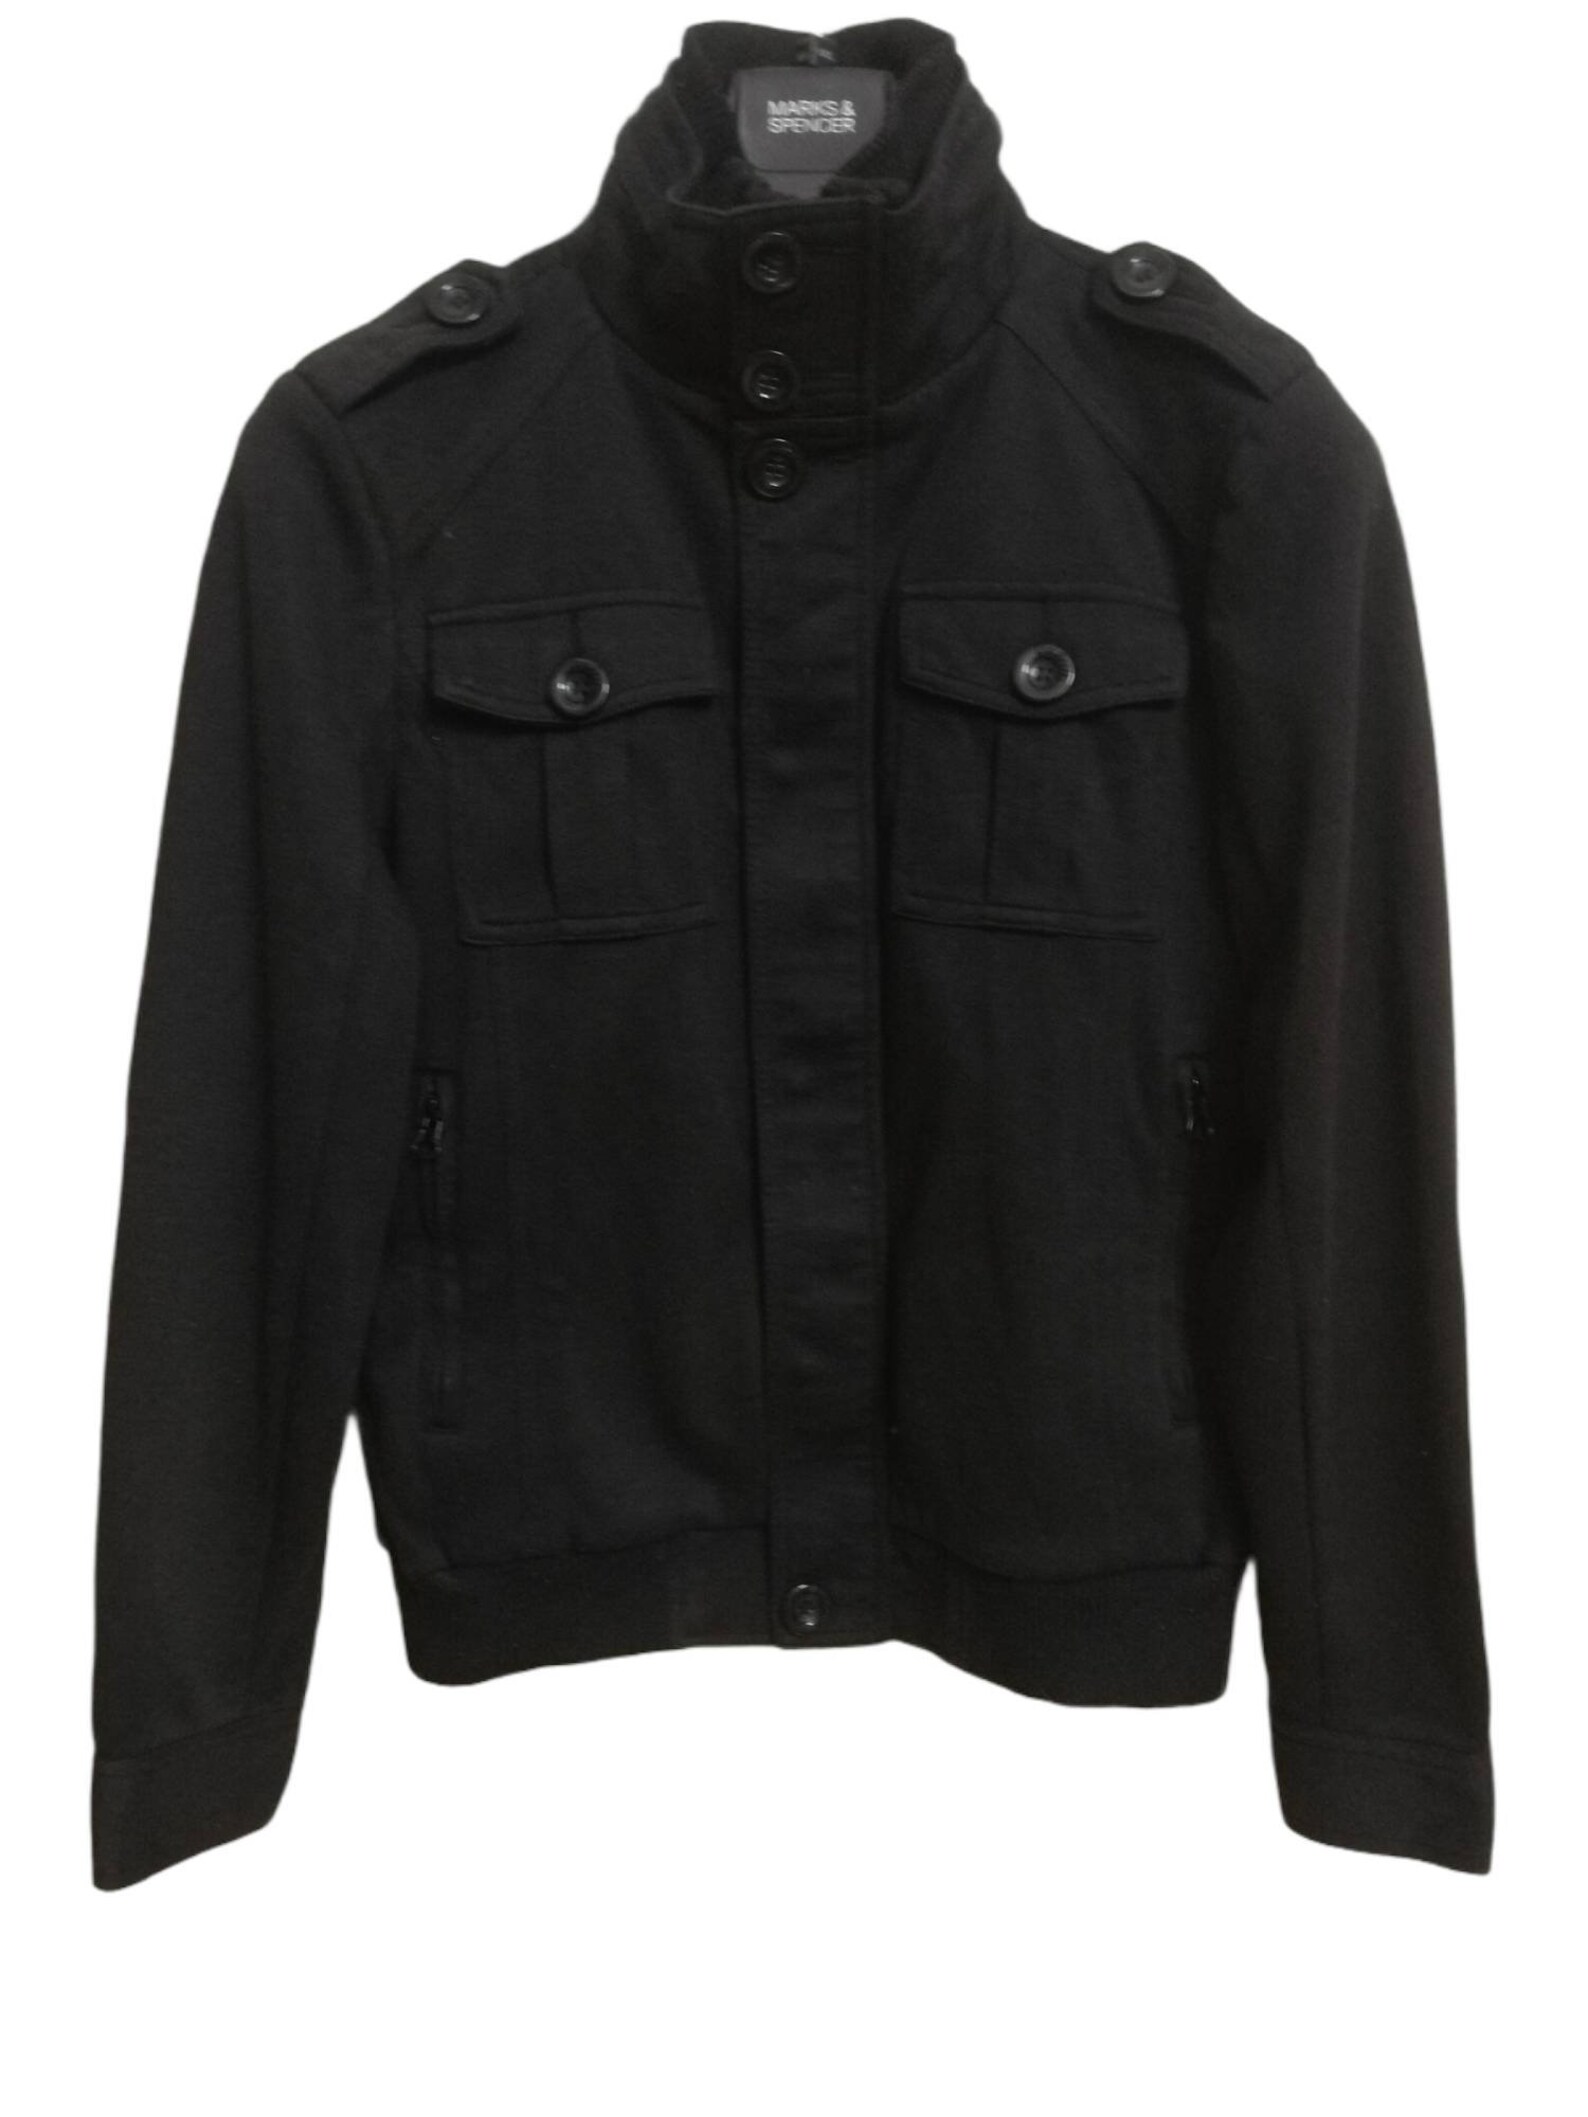 Vtg von dutch large size l black jacket long sleeve | Etsy